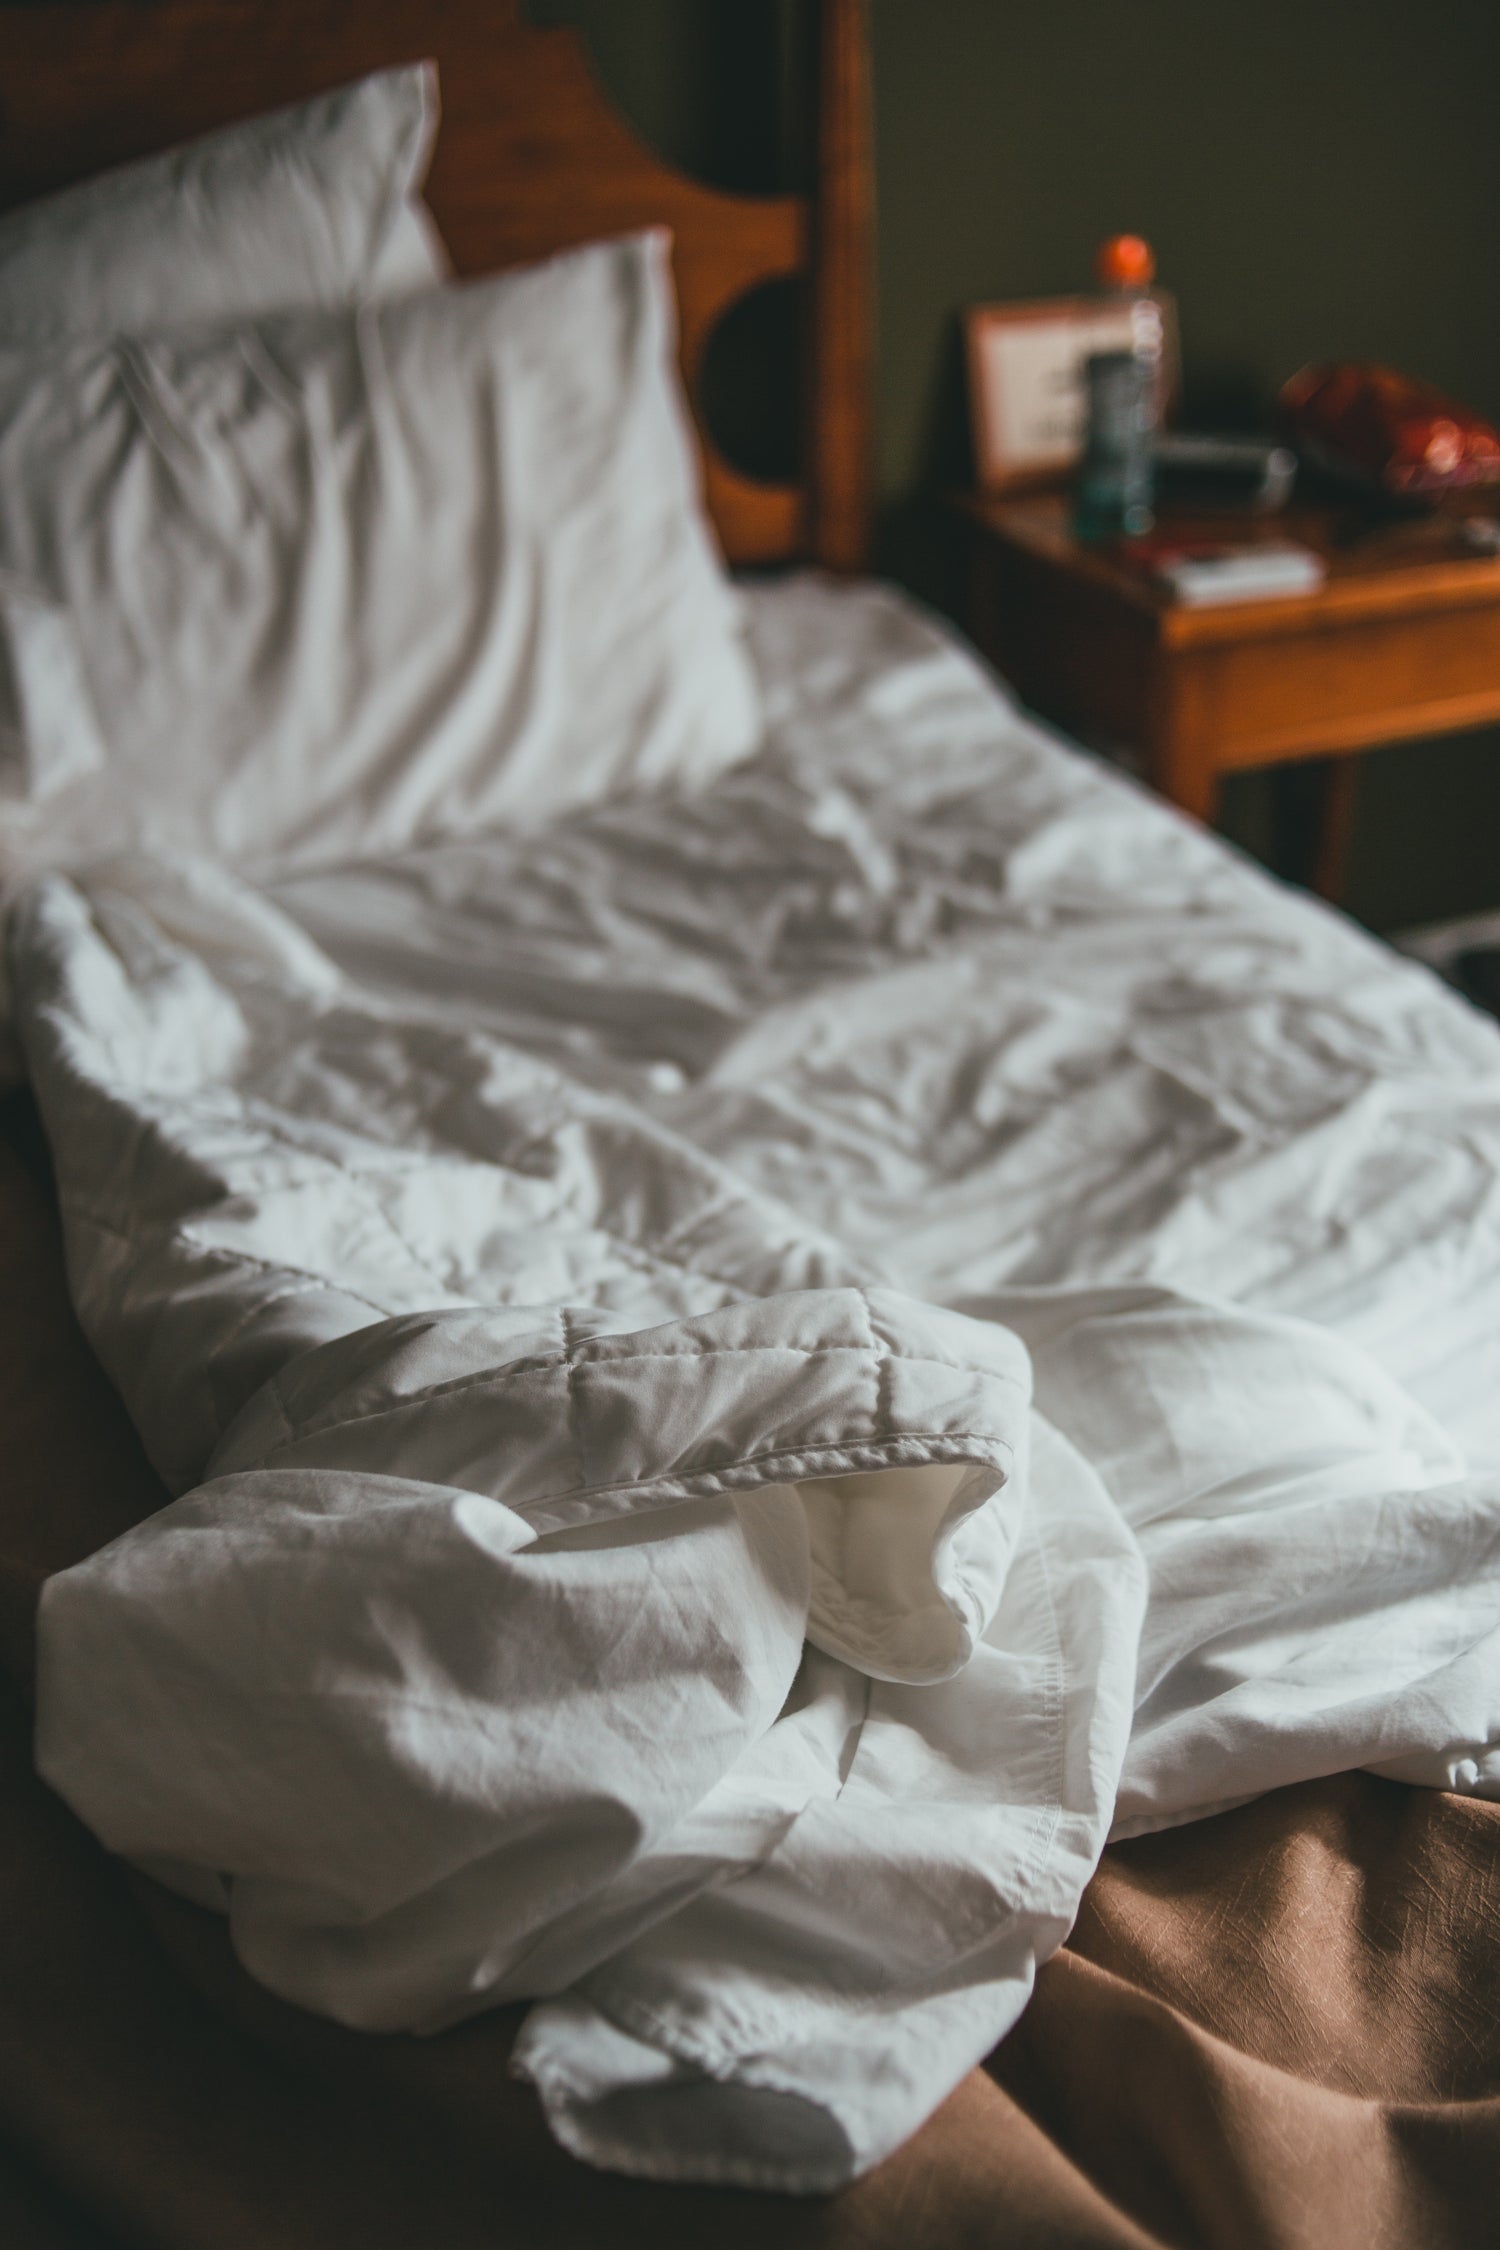 5 ways to spice up bedroom intimacy